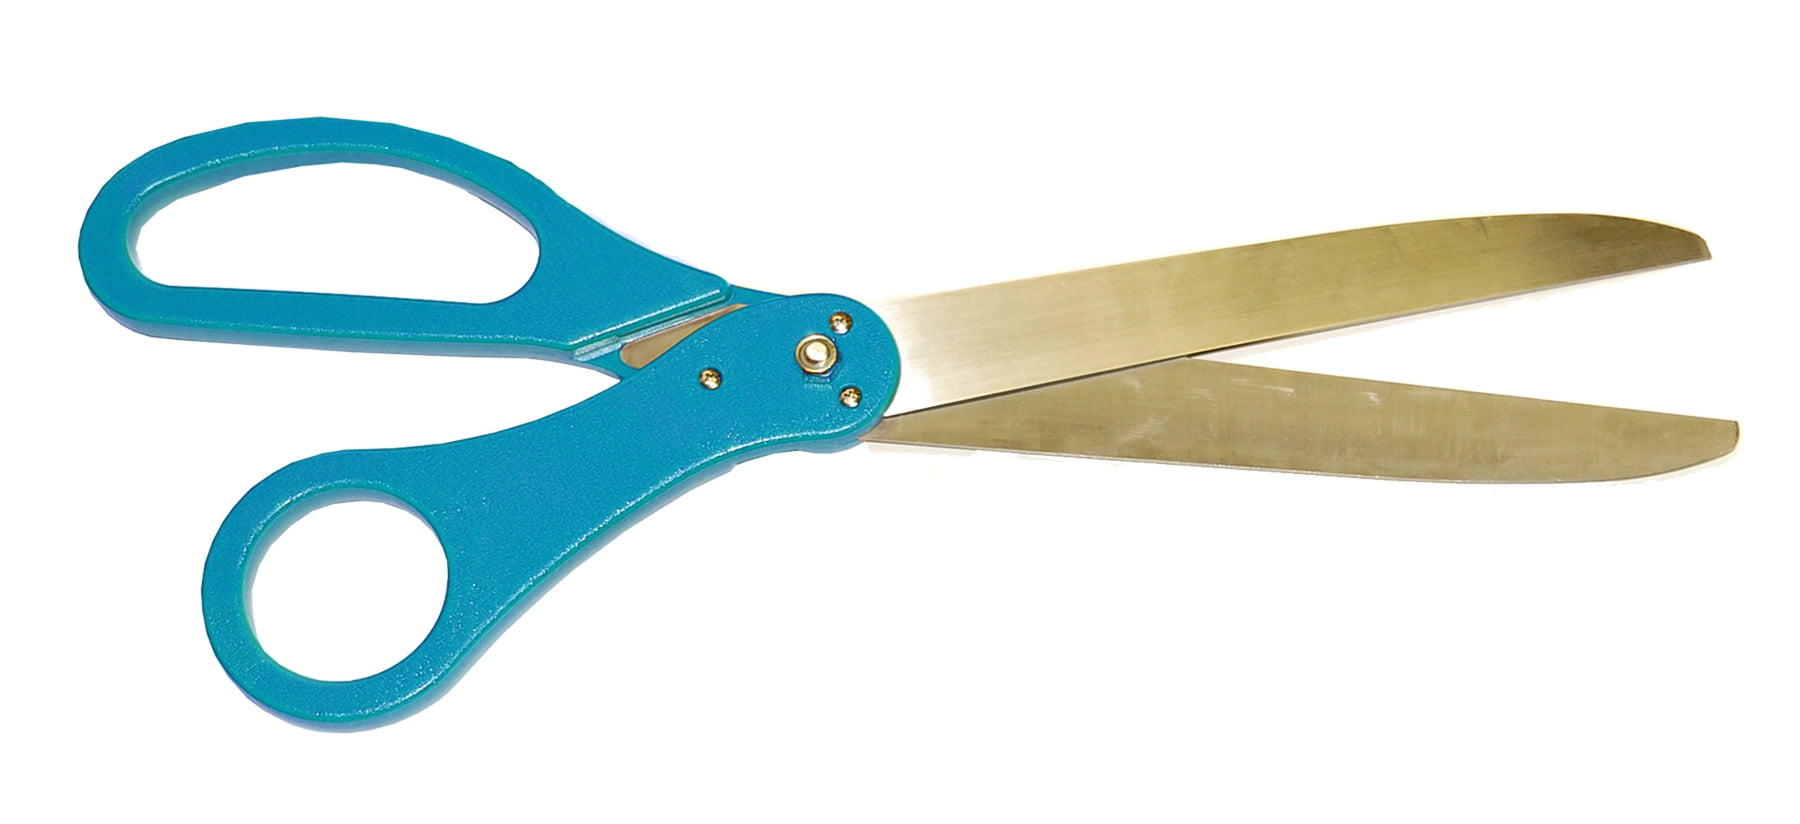 Morris Costumes BB129BU Ribbon Cutting Scissors- Handle Only- Blue